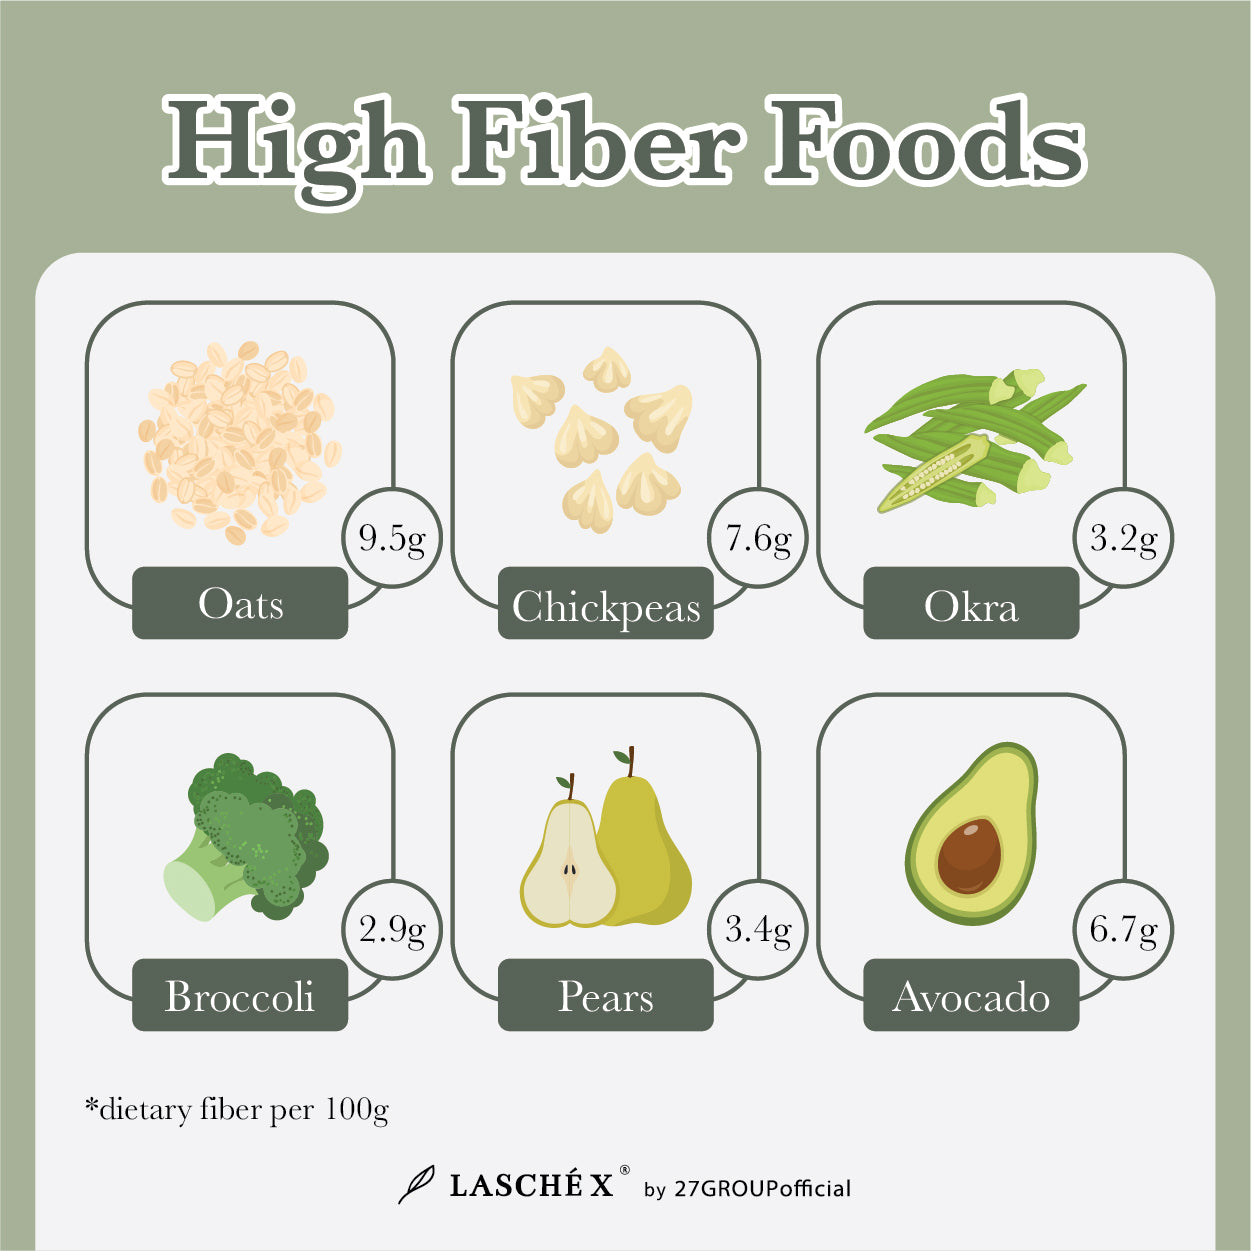 High fiber foods, vegetables, fruits per 100g